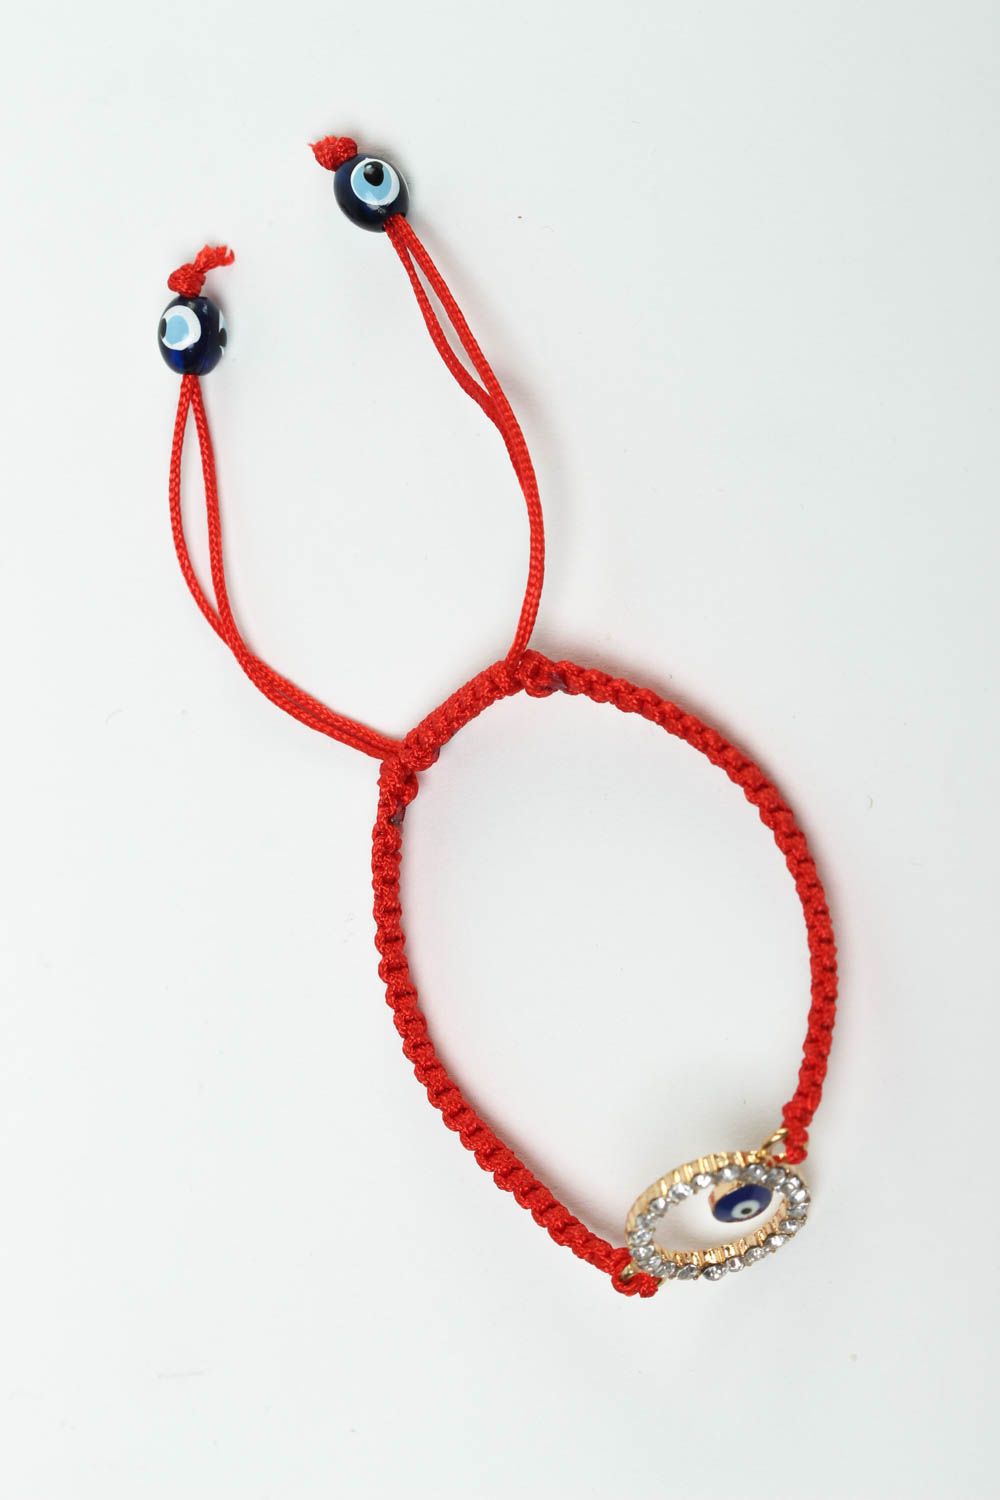 Beautiful handmade friendship bracelet artisan jewelry designs fashion trends photo 2